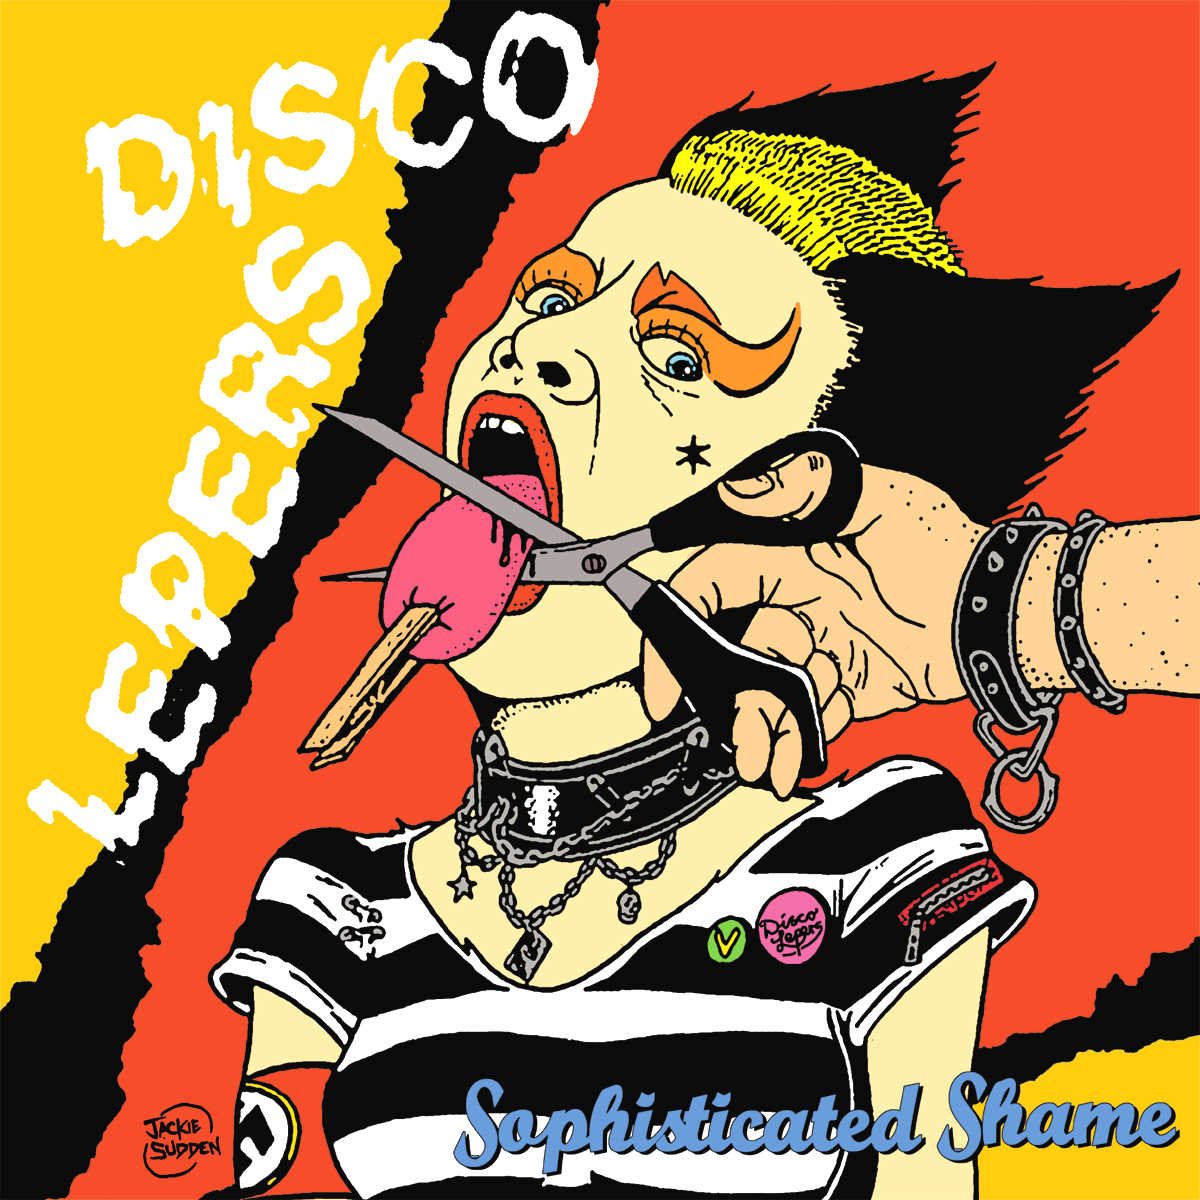 Disco Lepers- Sophisticated Shame LP ~TAZER PIN + ORANGE WAX LTD TO 50!